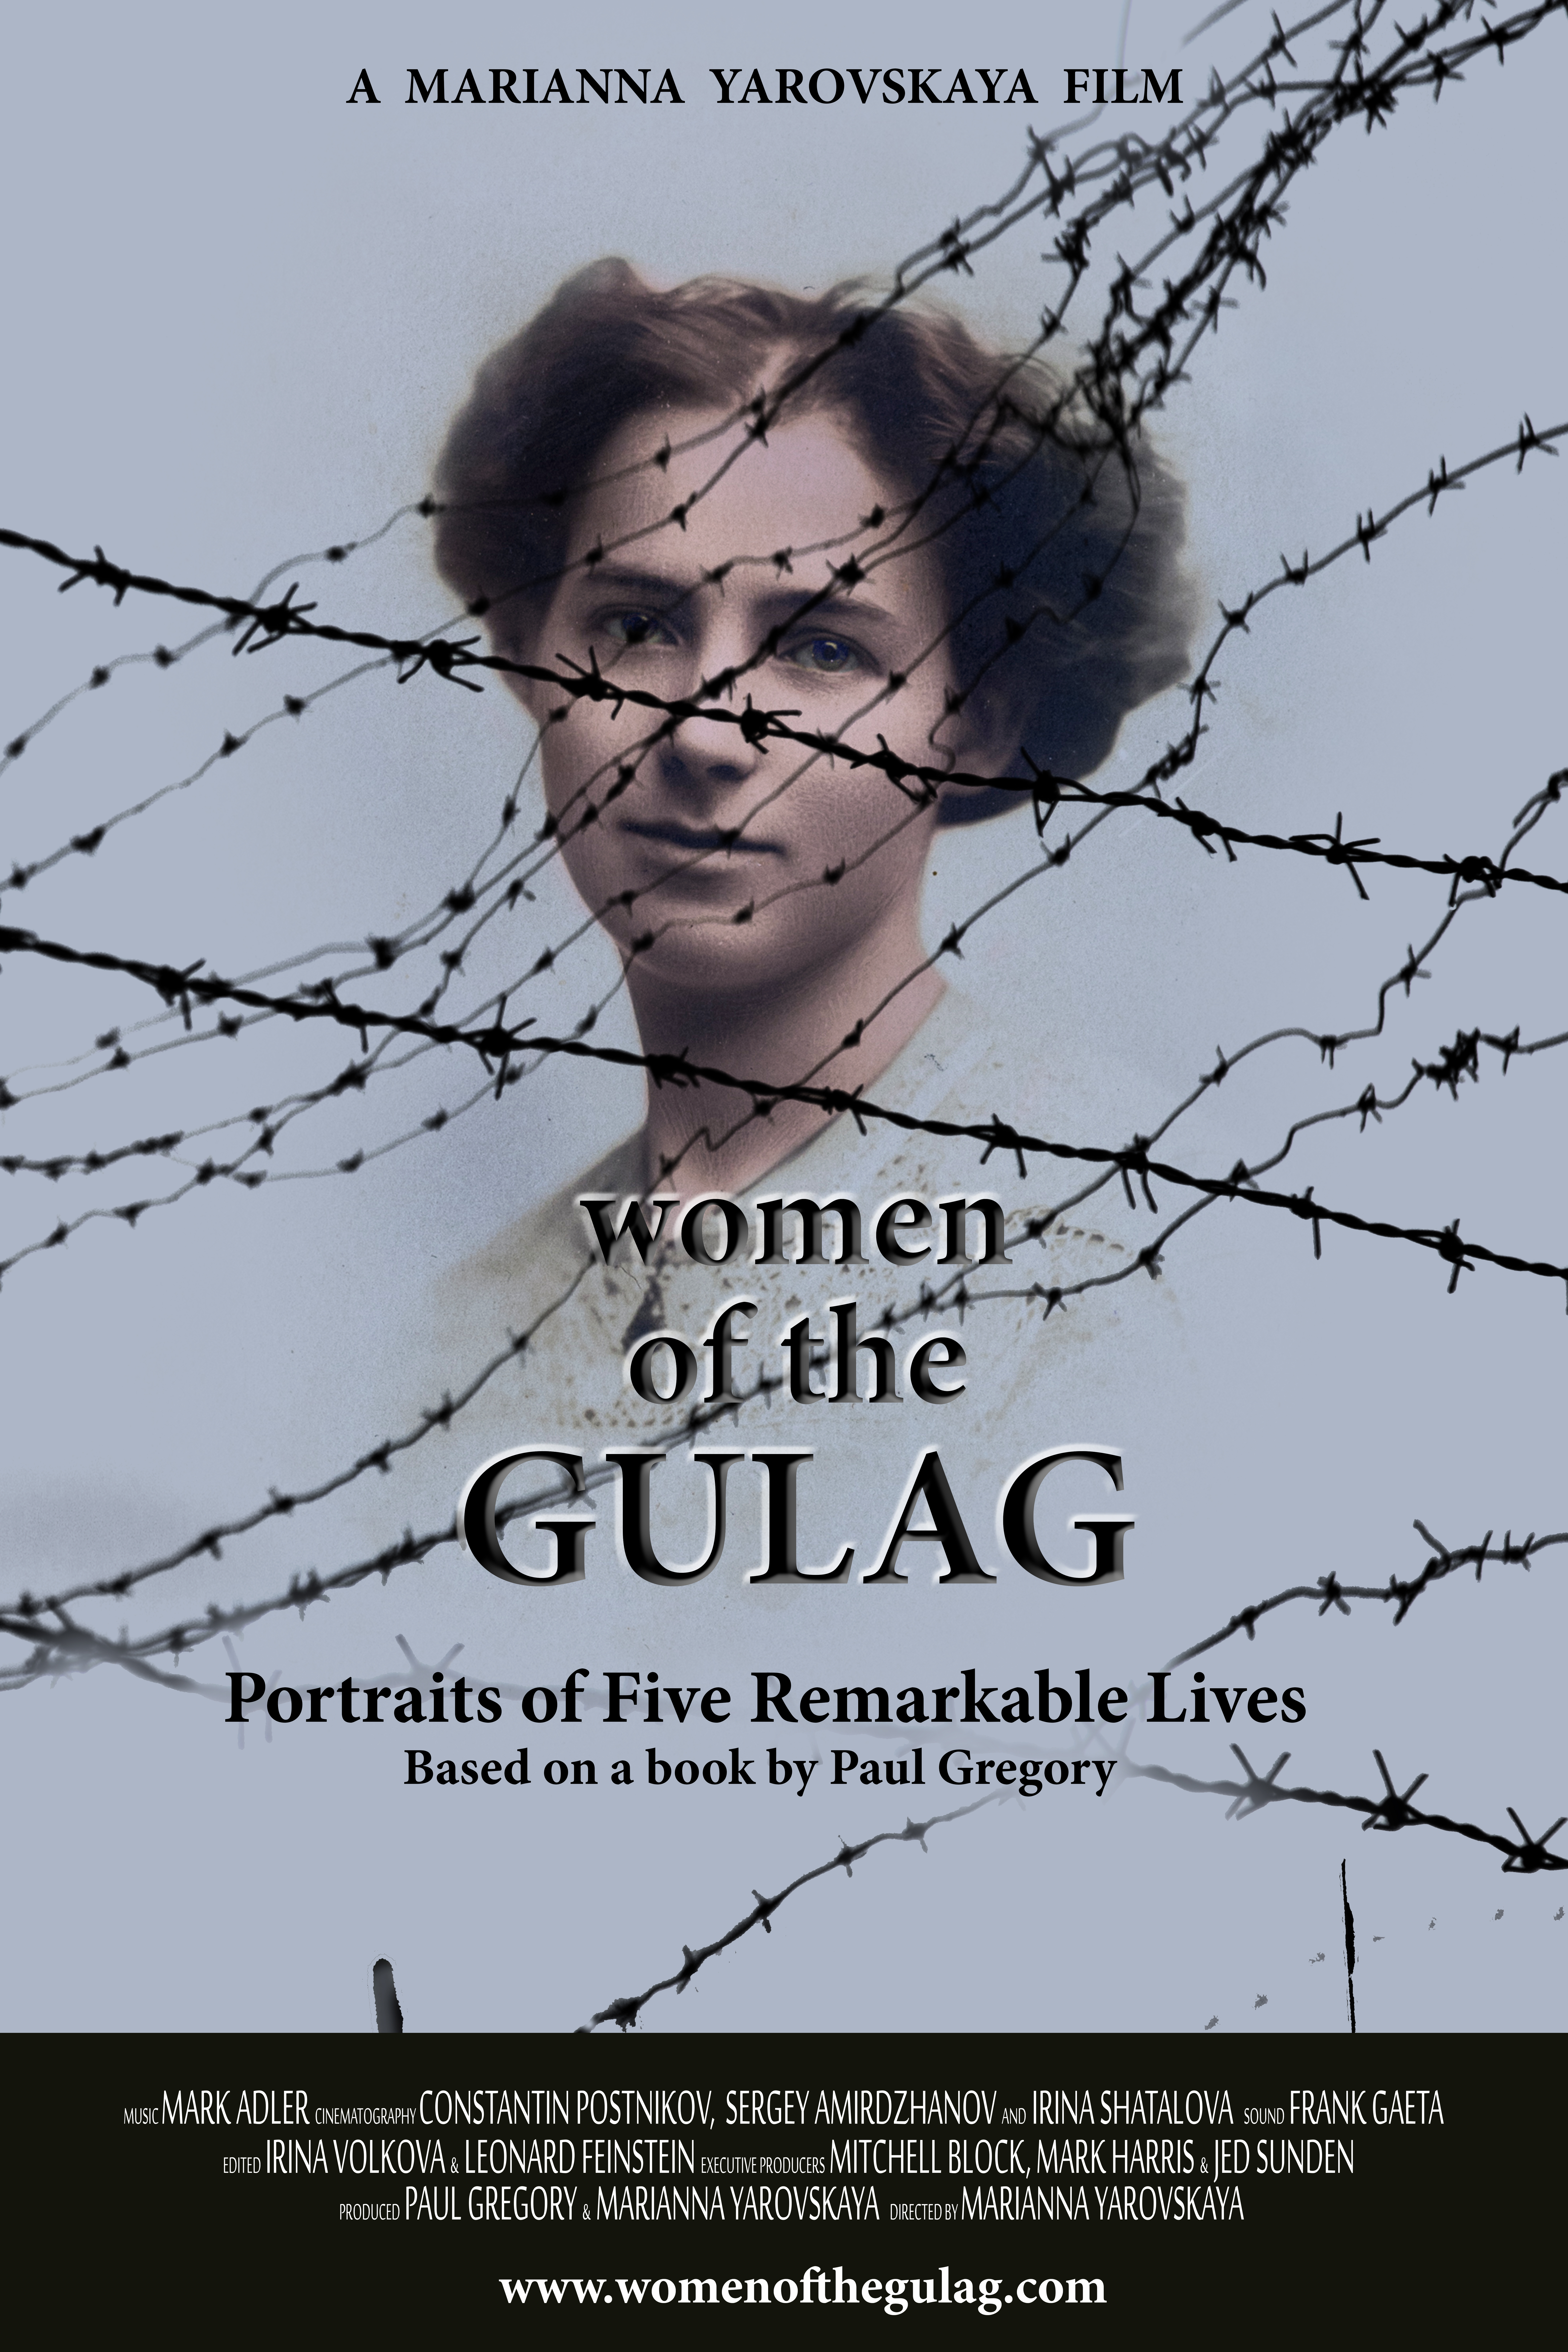 Women of the Gulag - Best Documentary Short shortlist nominee - Academy Awards 2018